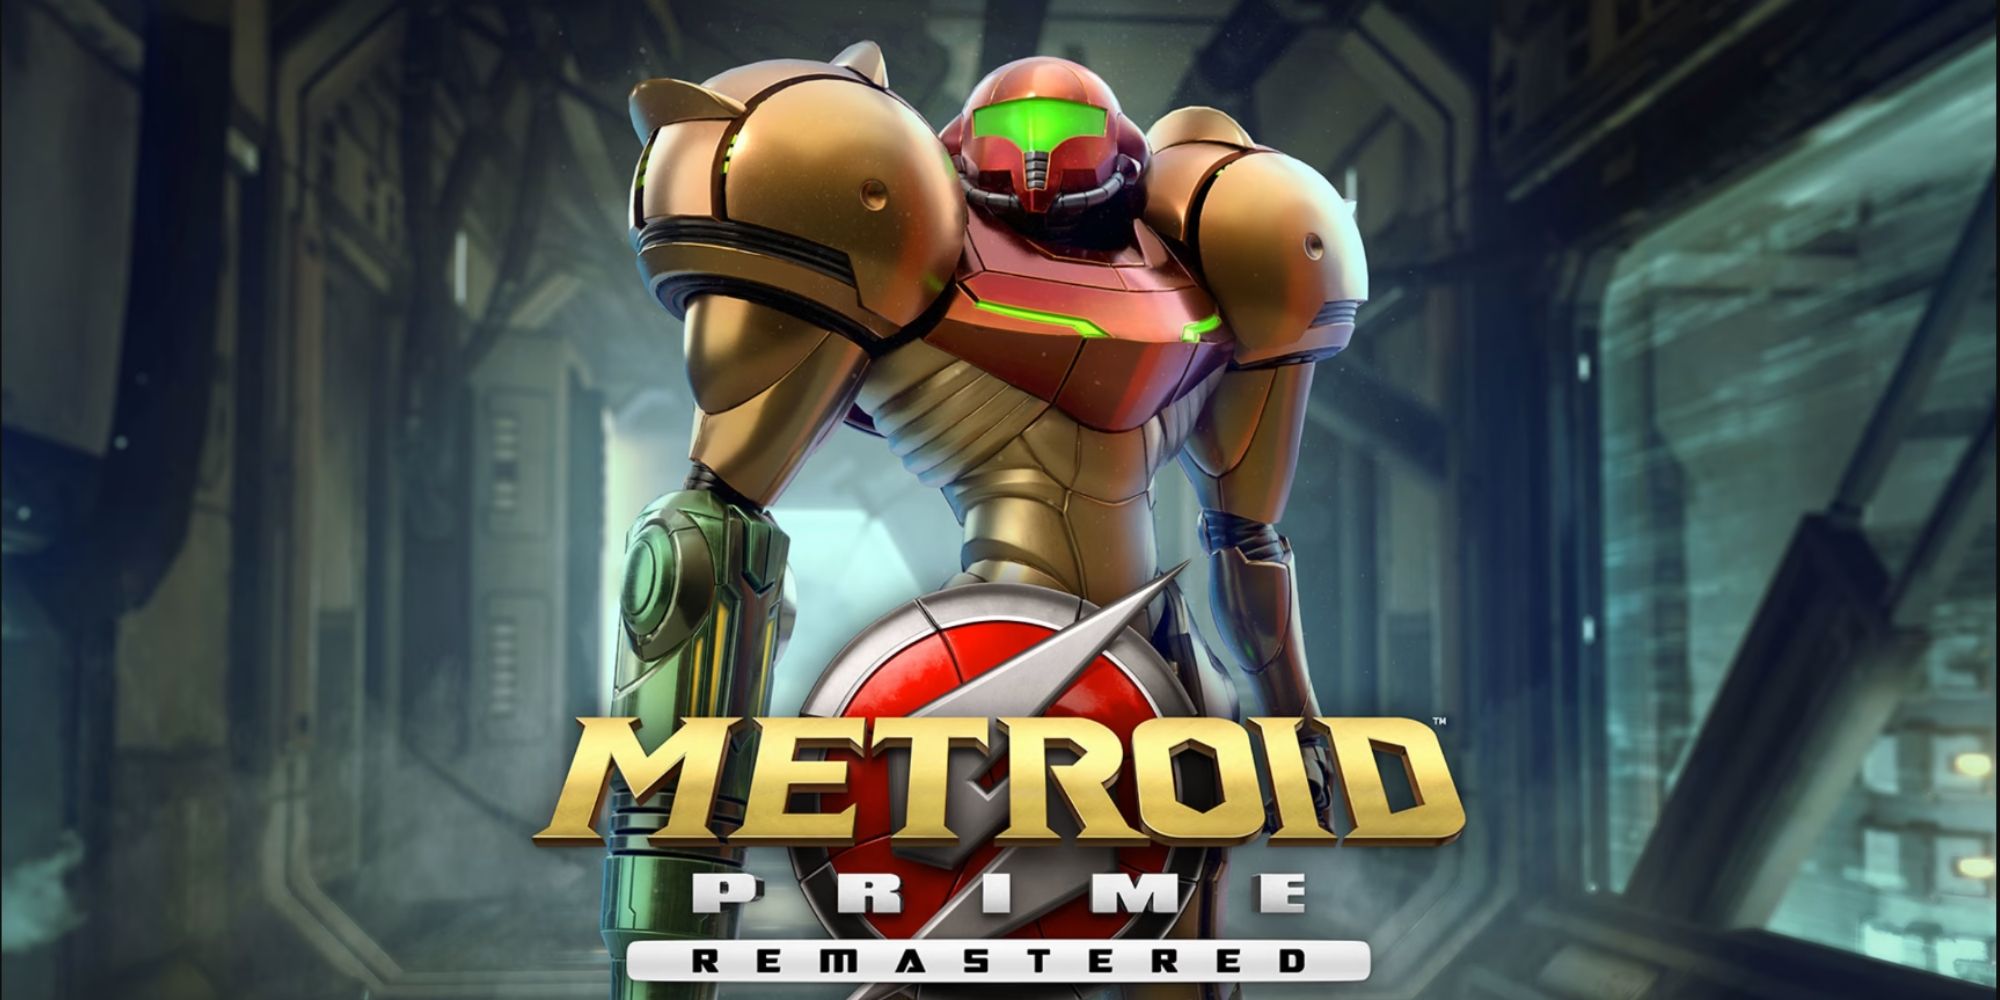 Metroid Prime Nintendo Switch art